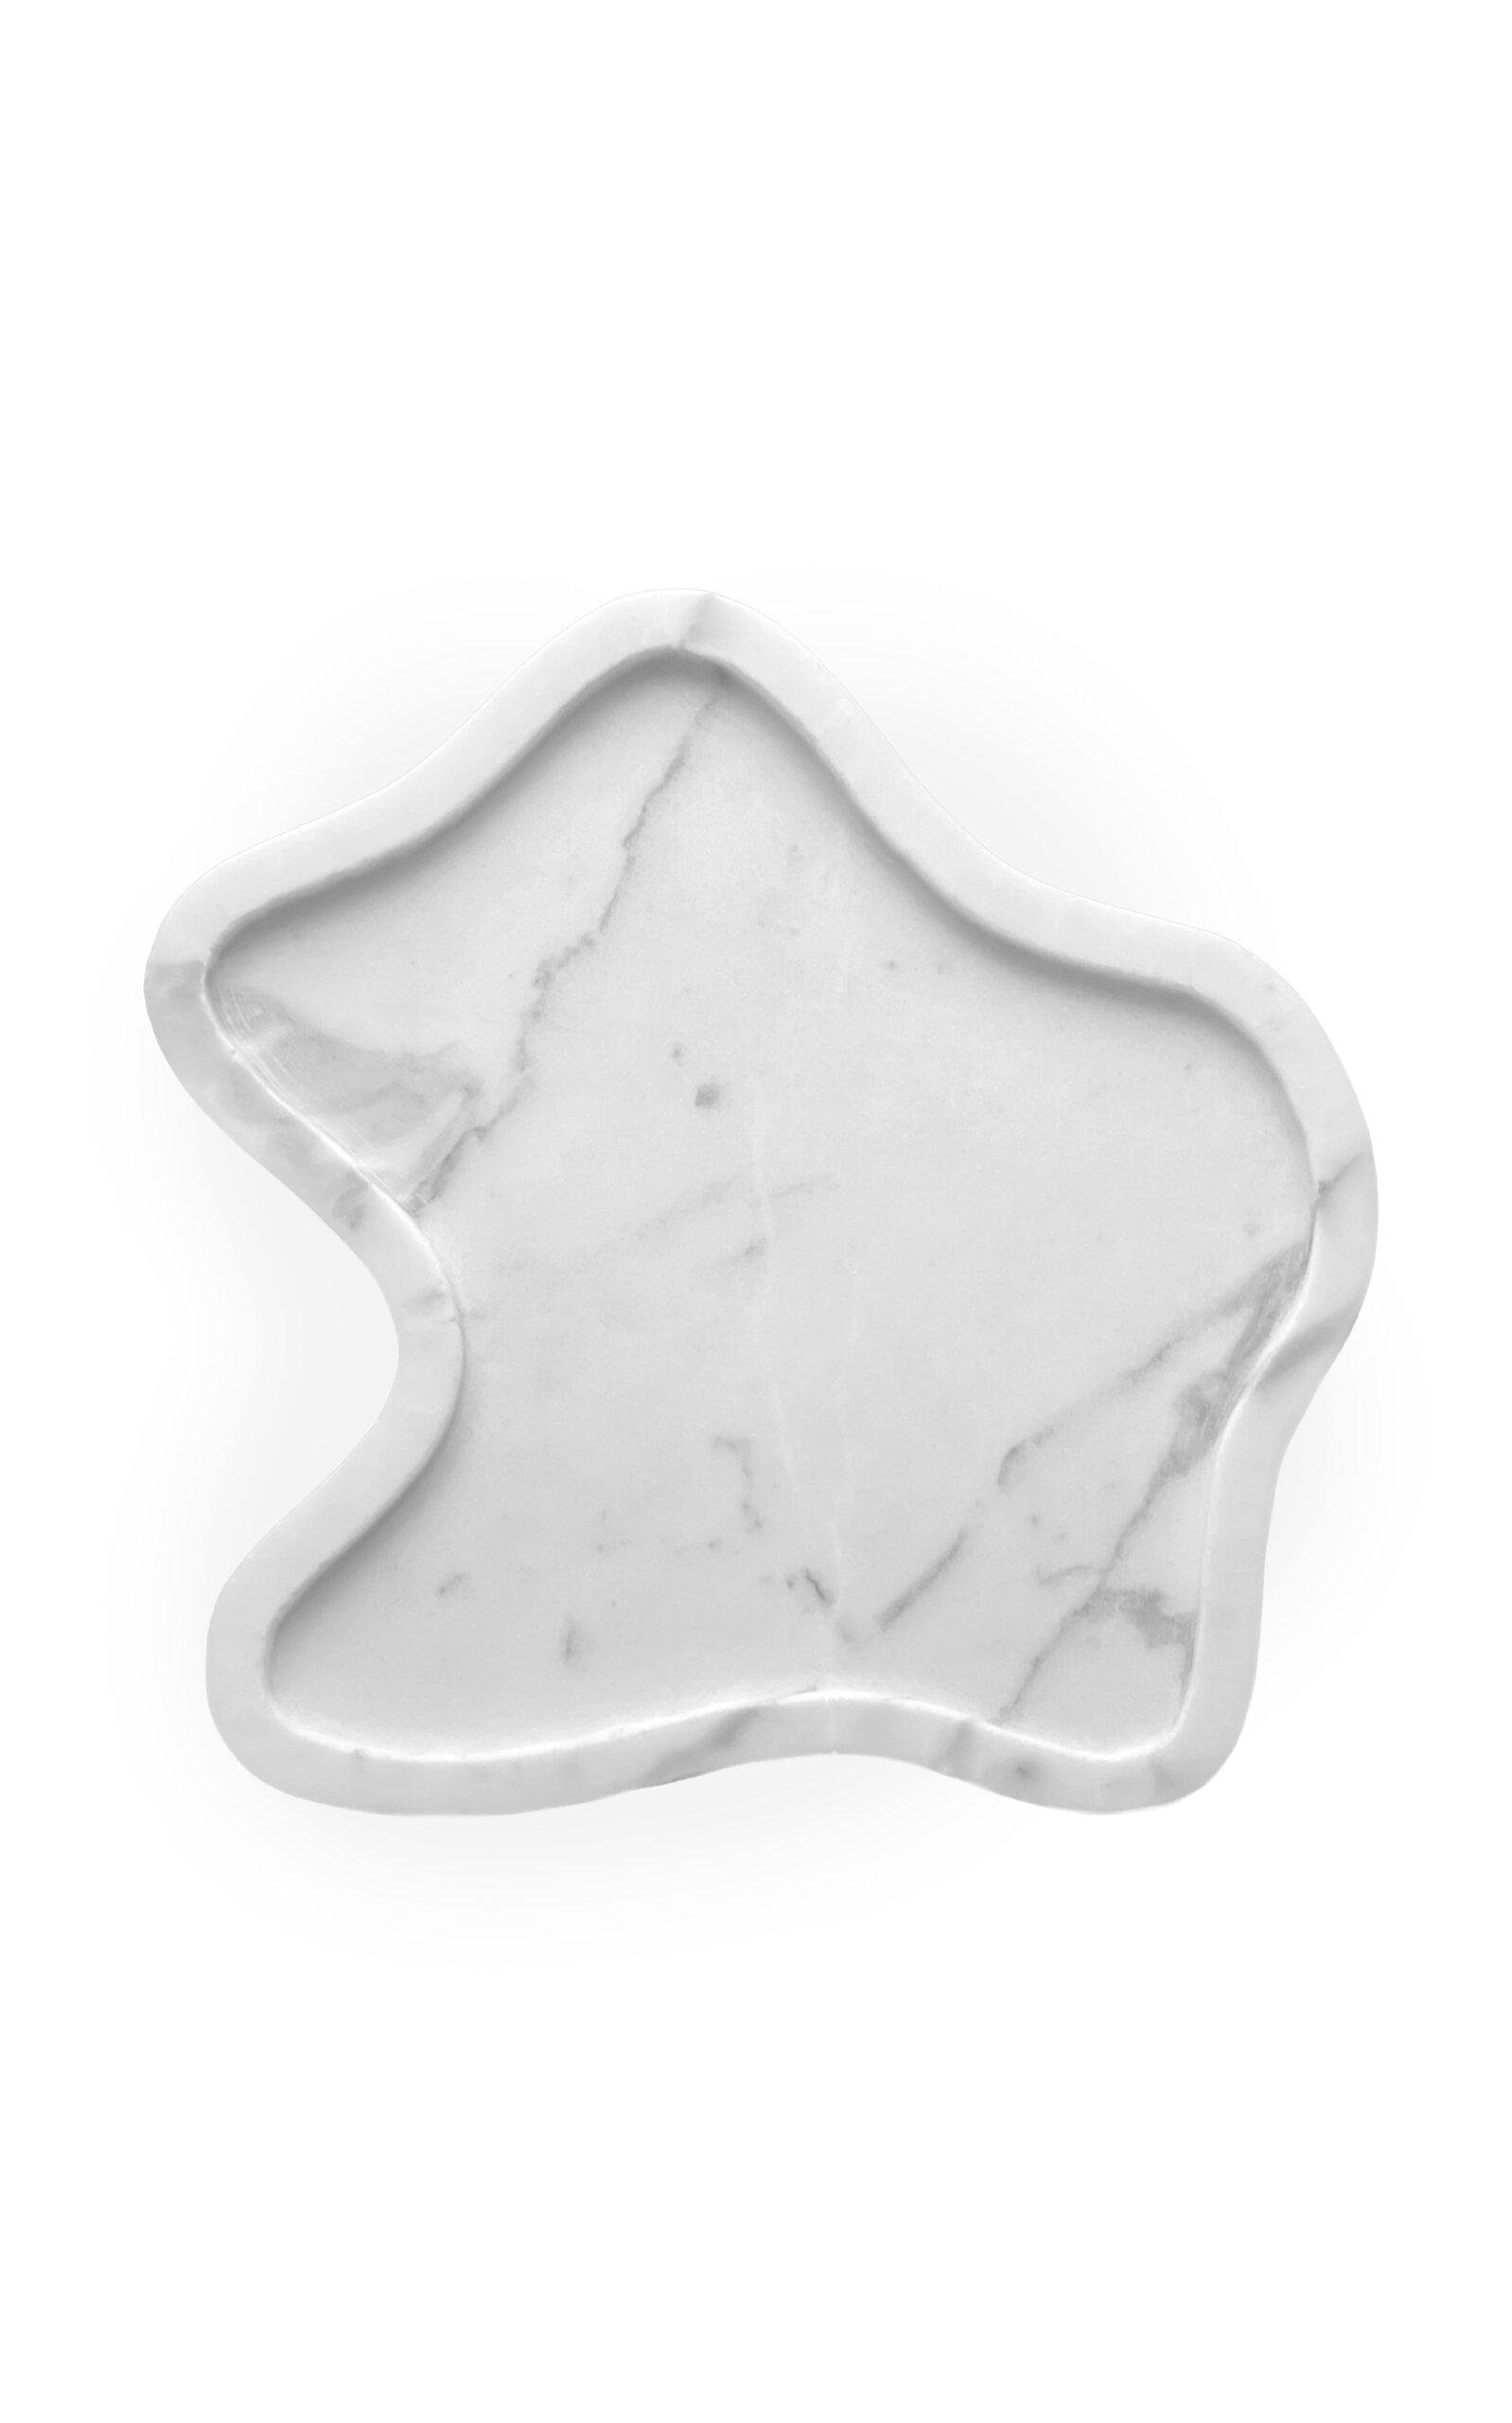 Anastasio Home - Flo Granite Tray - White - Moda Operandi by ANASTASIO HOME